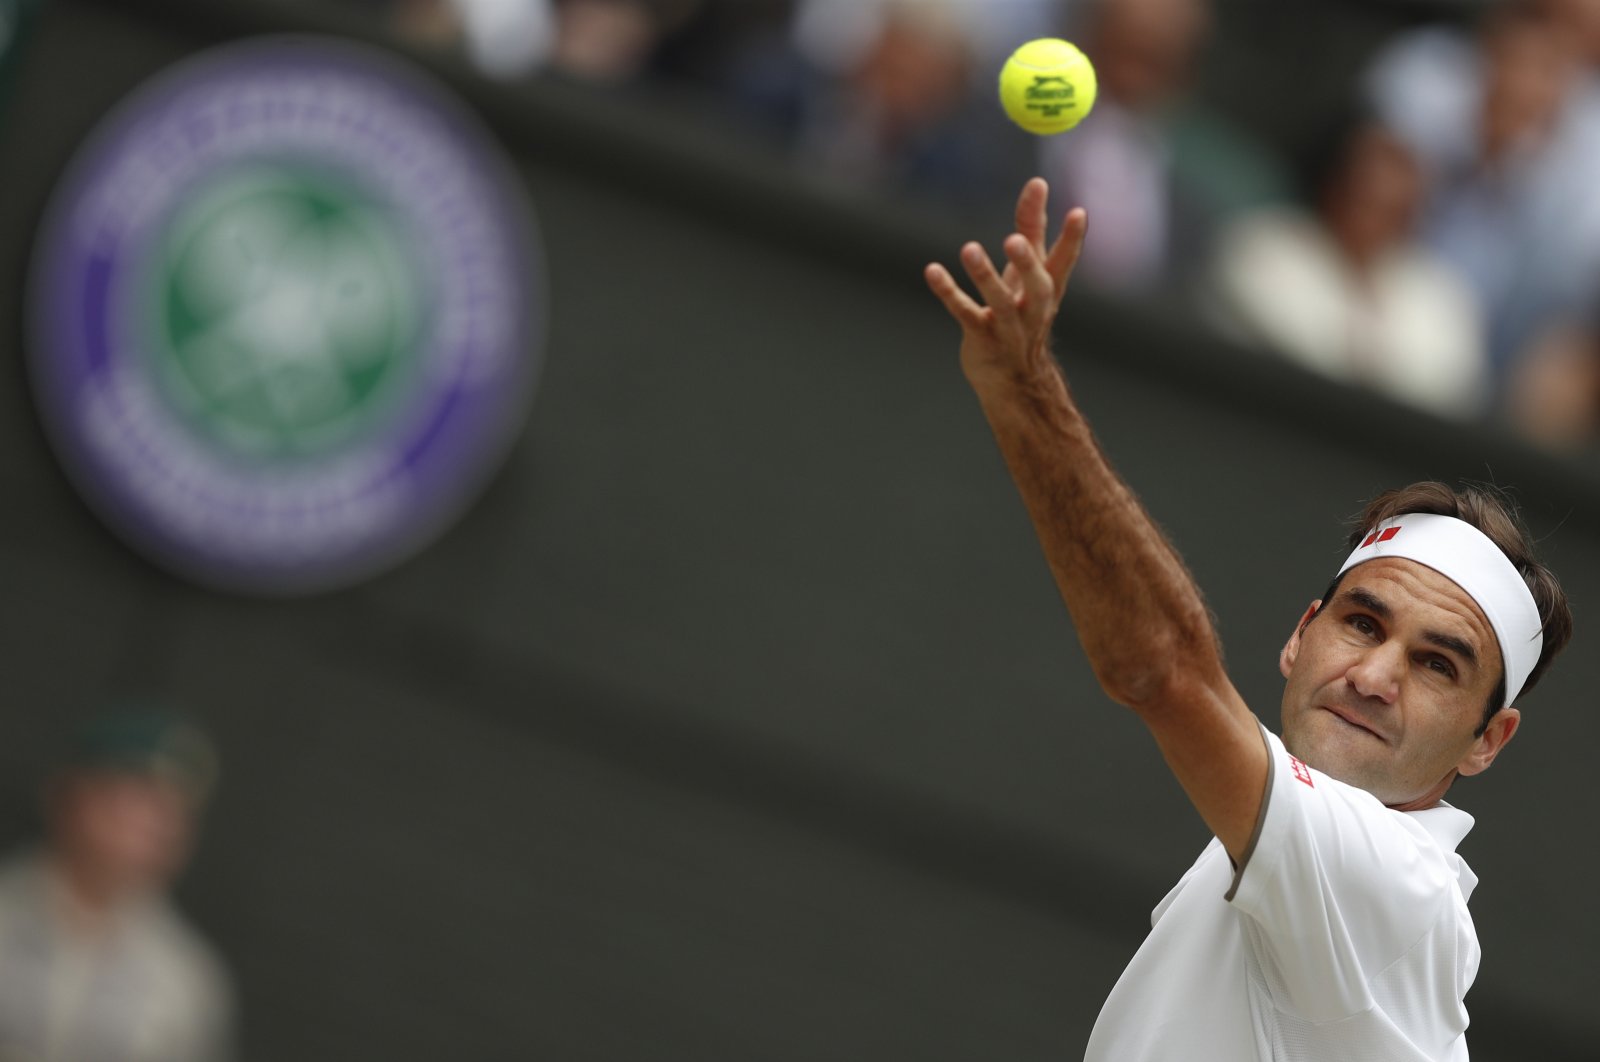 Roger Federer serves to Novak Djokovic during a Wimbledon tennis tournament final, in London, Britain, July 14, 2019. (AP Photo)